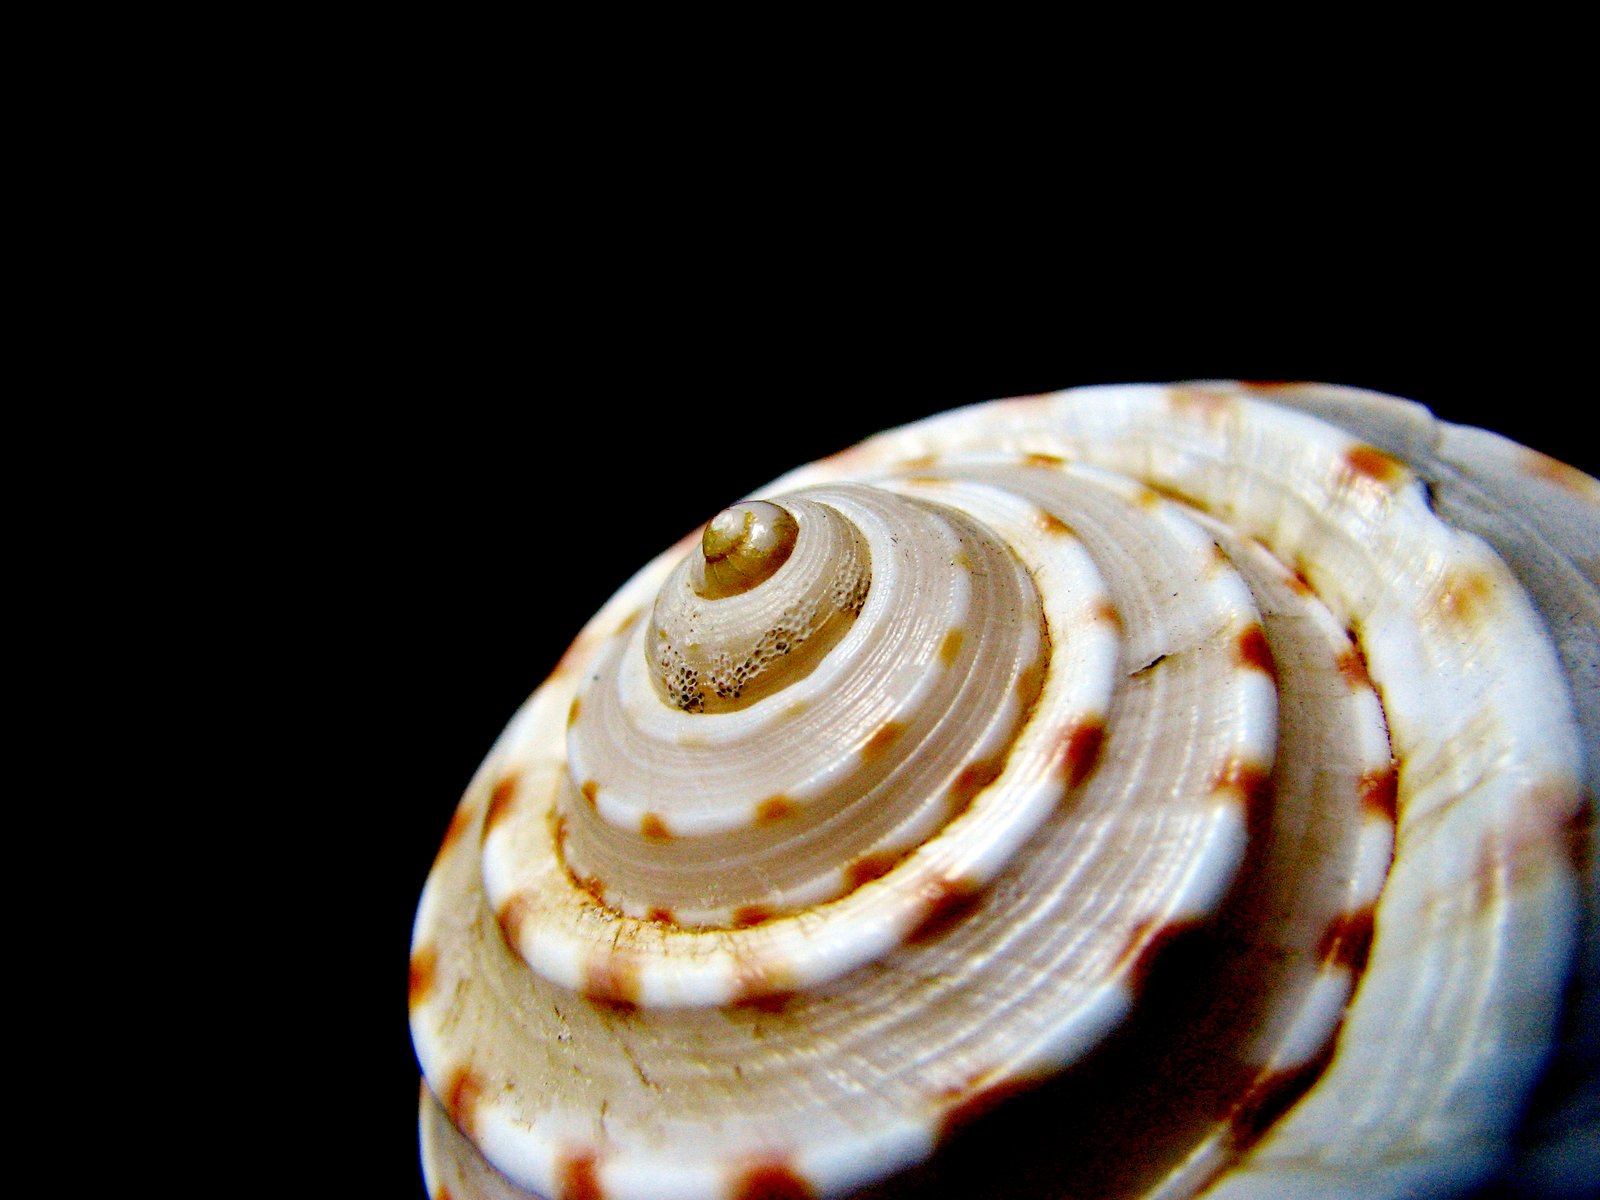 the seashell is shaped like an umbrella